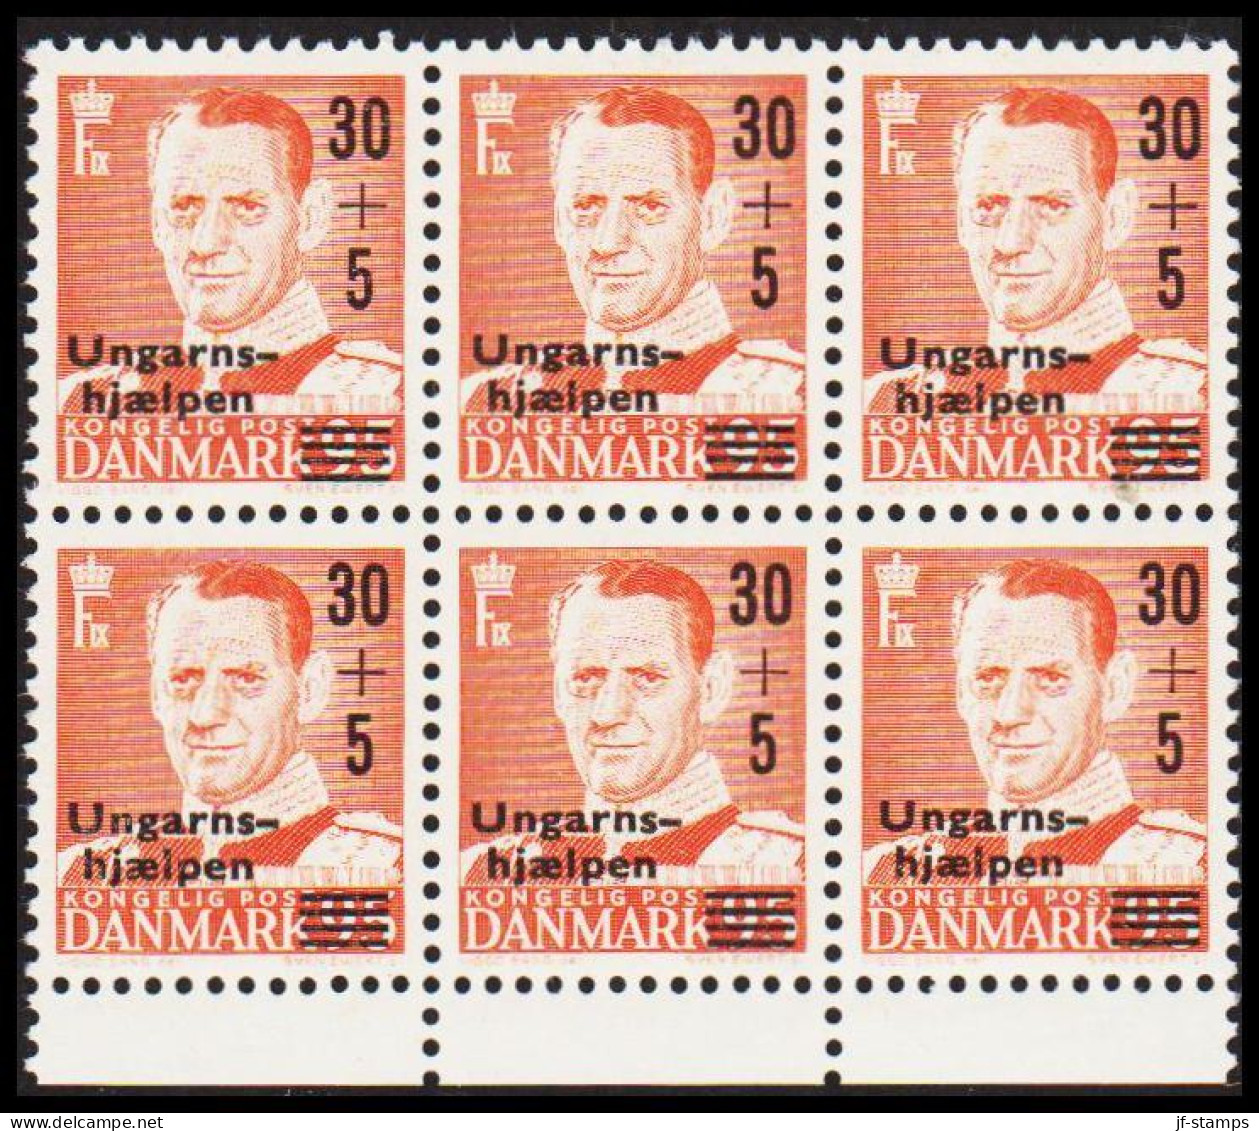 1957. DANMARK. 30+5 Ungarnshjælpen On 95 øre Frederik IX In Never Hinged 6-block. (Michel 366) - JF540693 - Covers & Documents